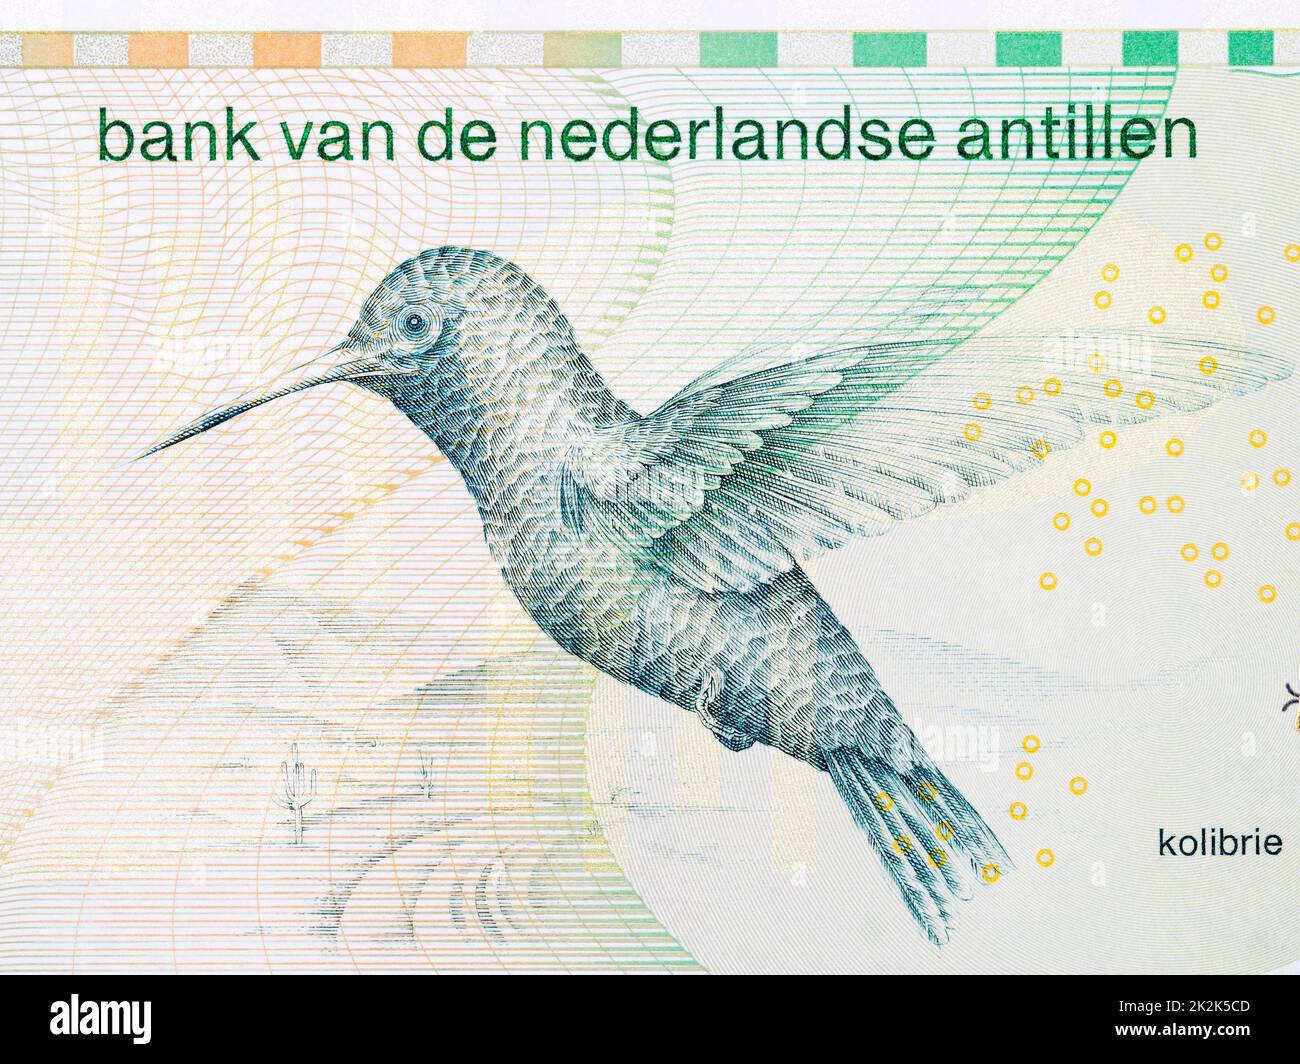 Kolibrie from Netherlands Antillean money Stock Photo